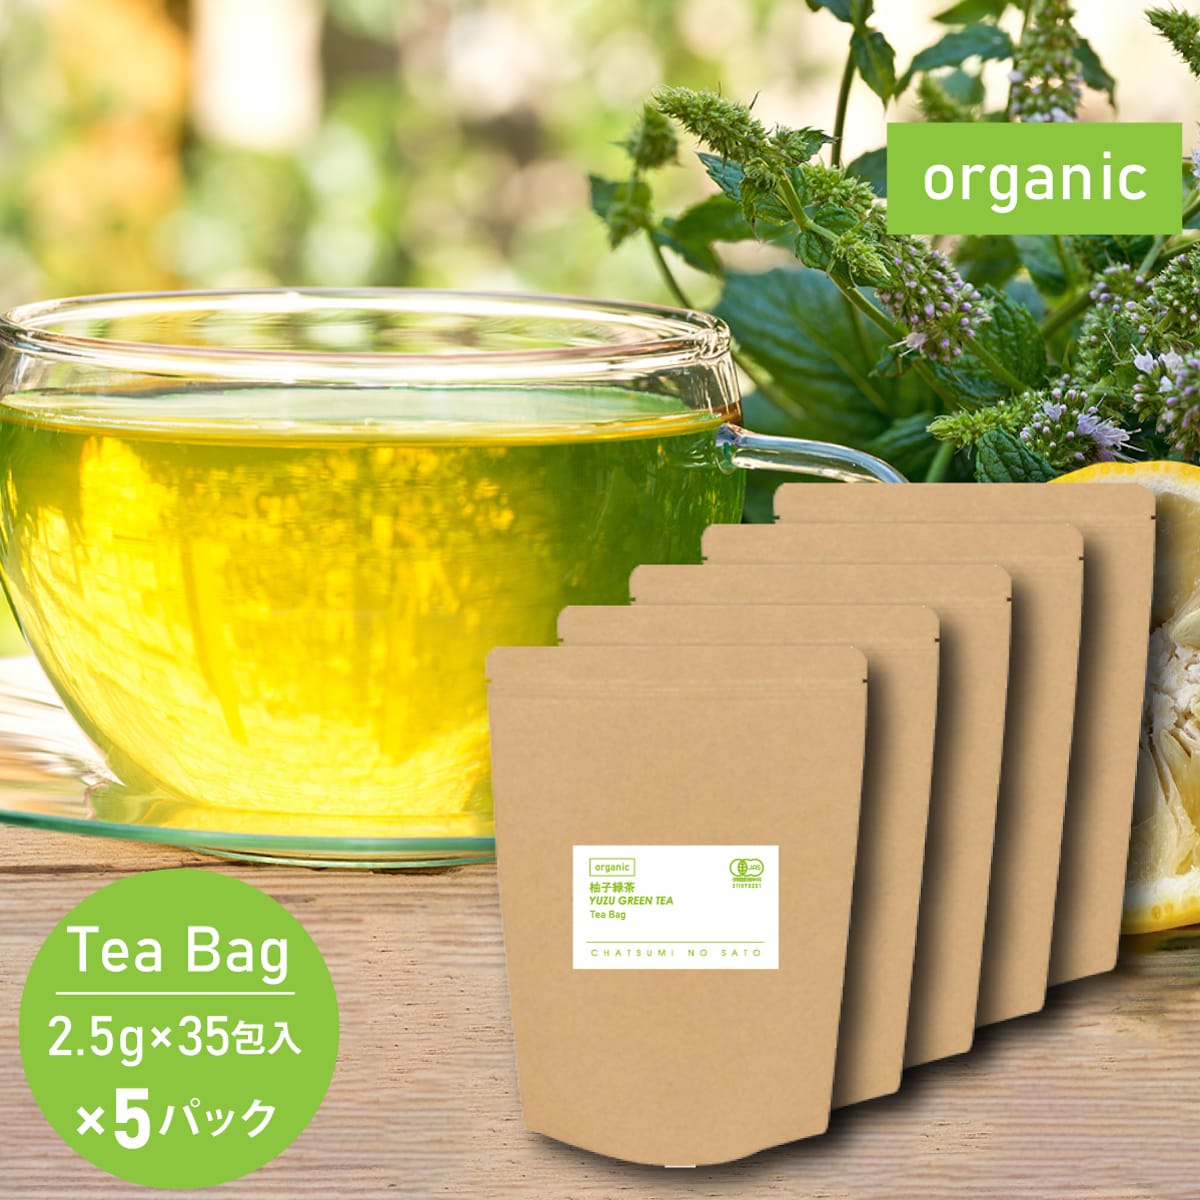 2.5g×35包×5パック】有機 柚子緑茶 糸付き ティーバッグを税込・送料込